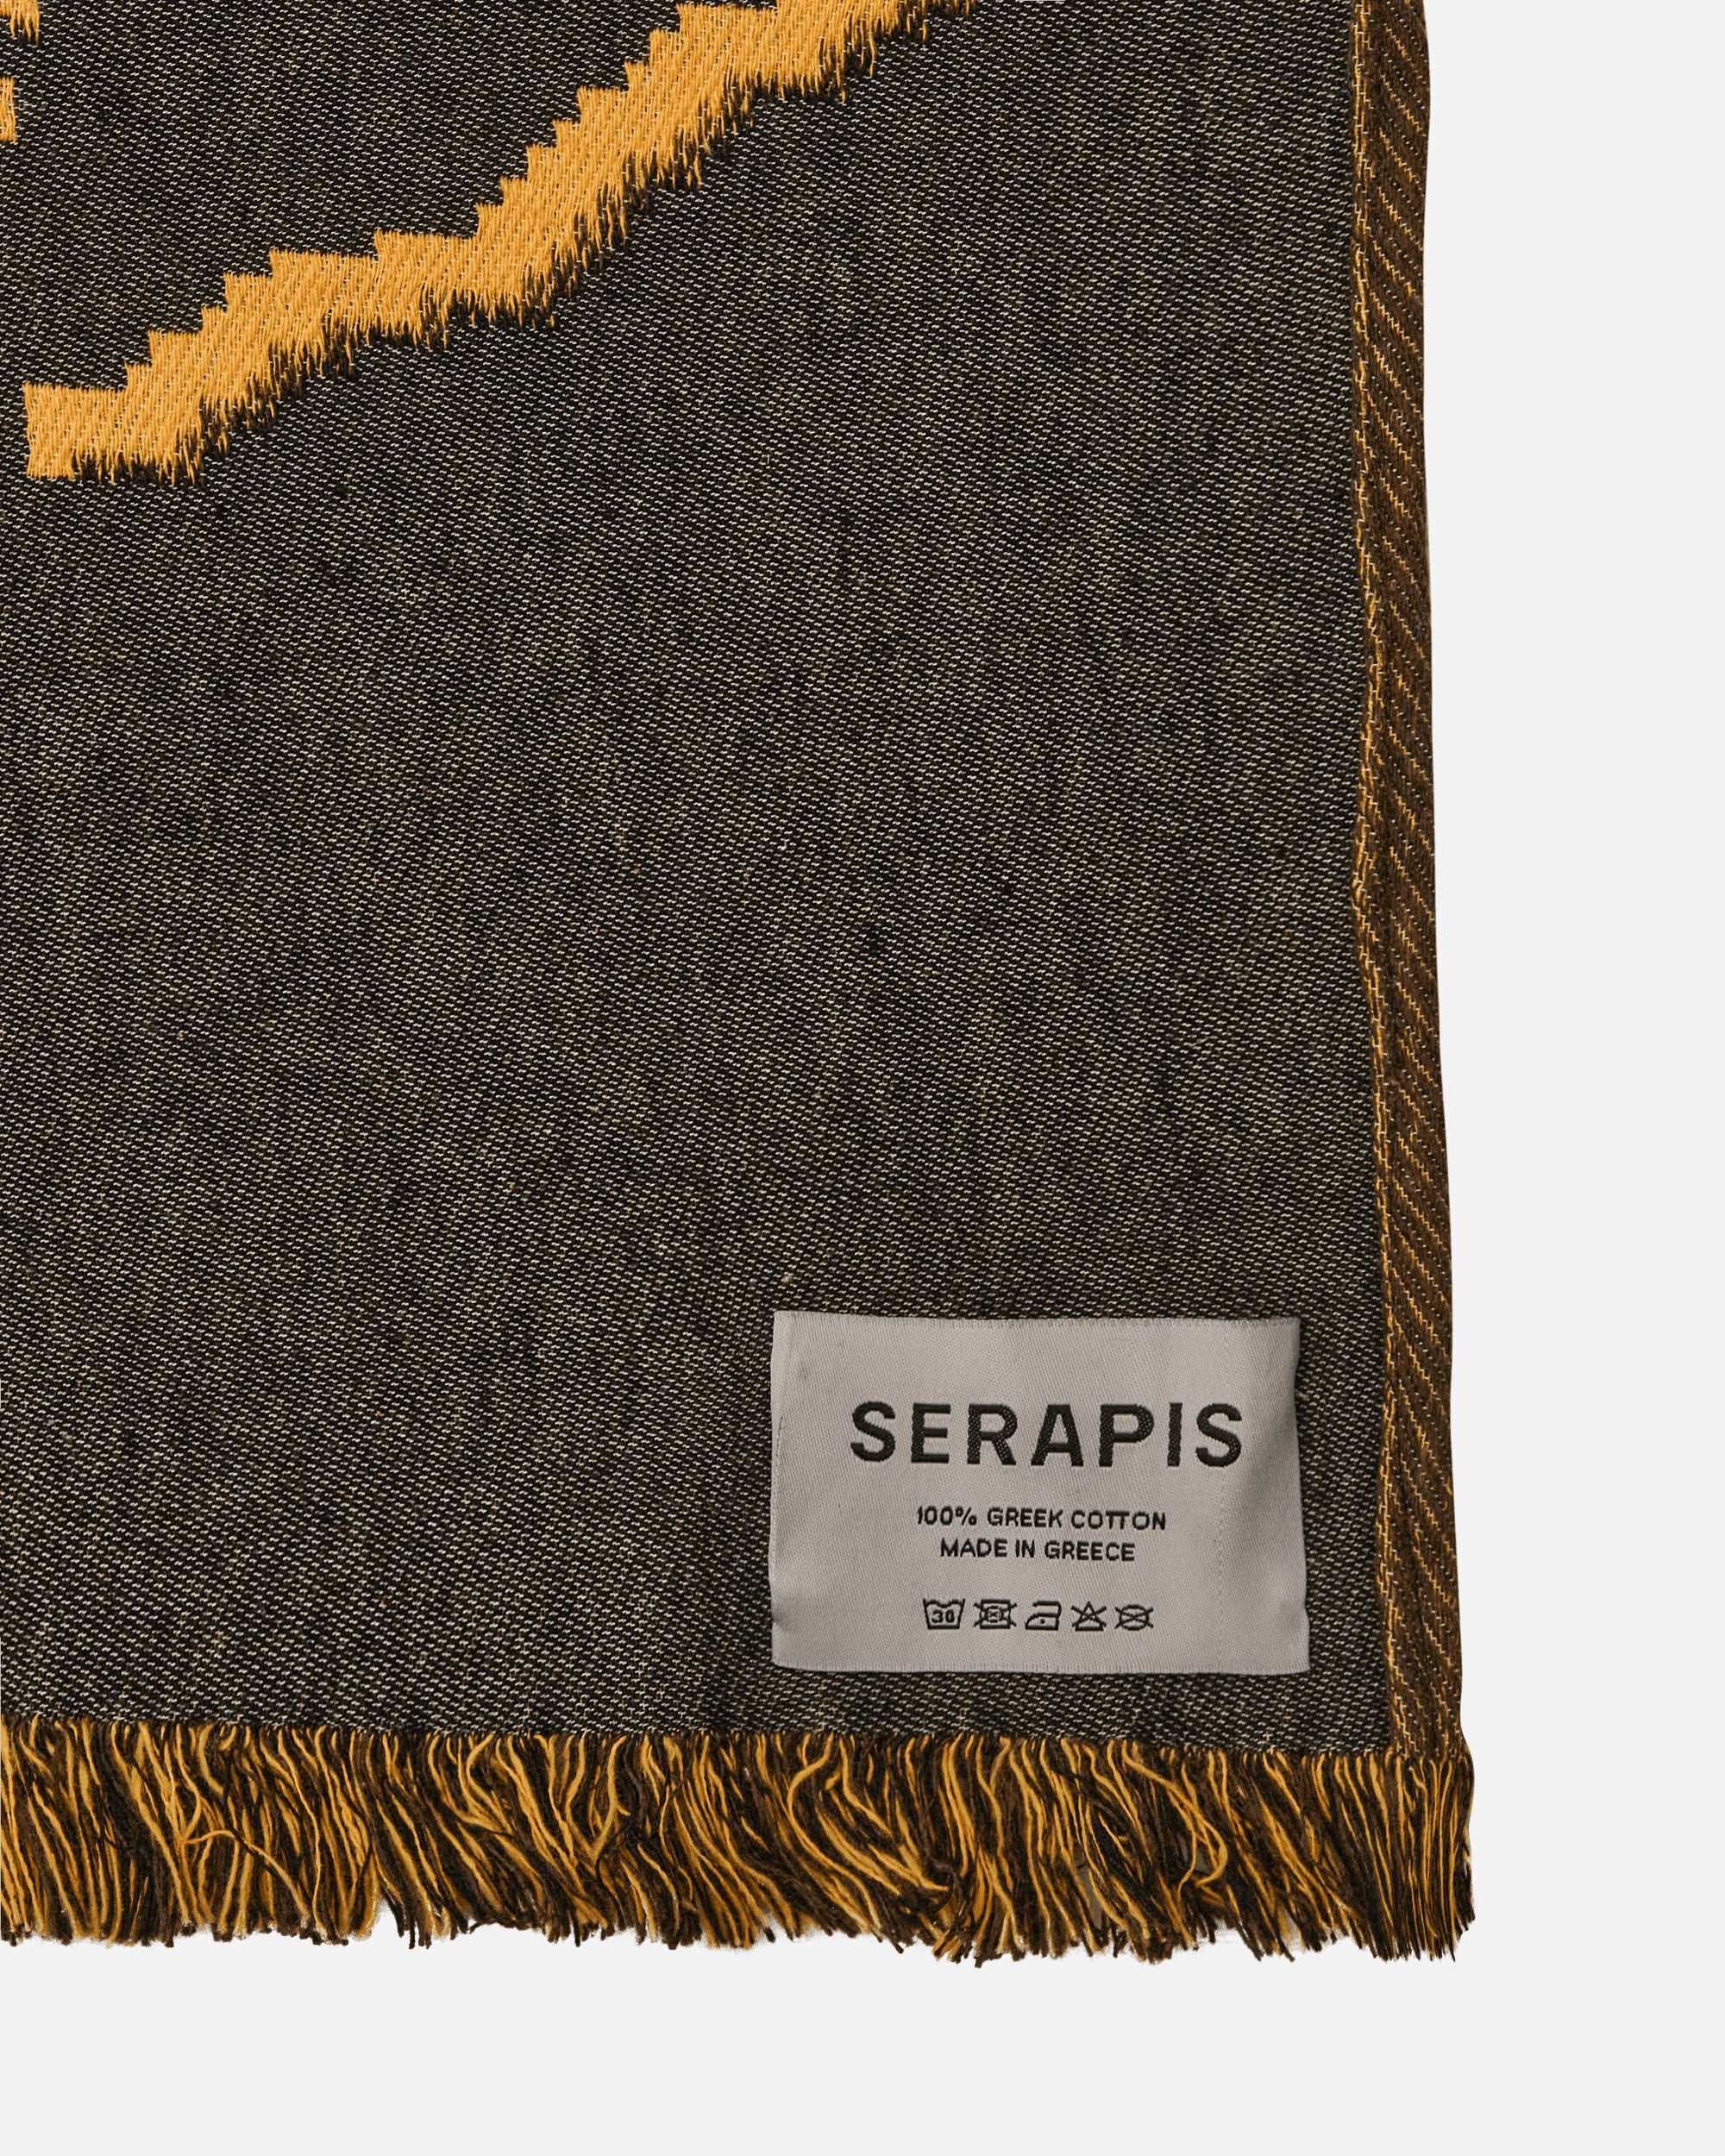 Serapis Rustoleum Blanket Various Homeware Design Items HW1BL1 001